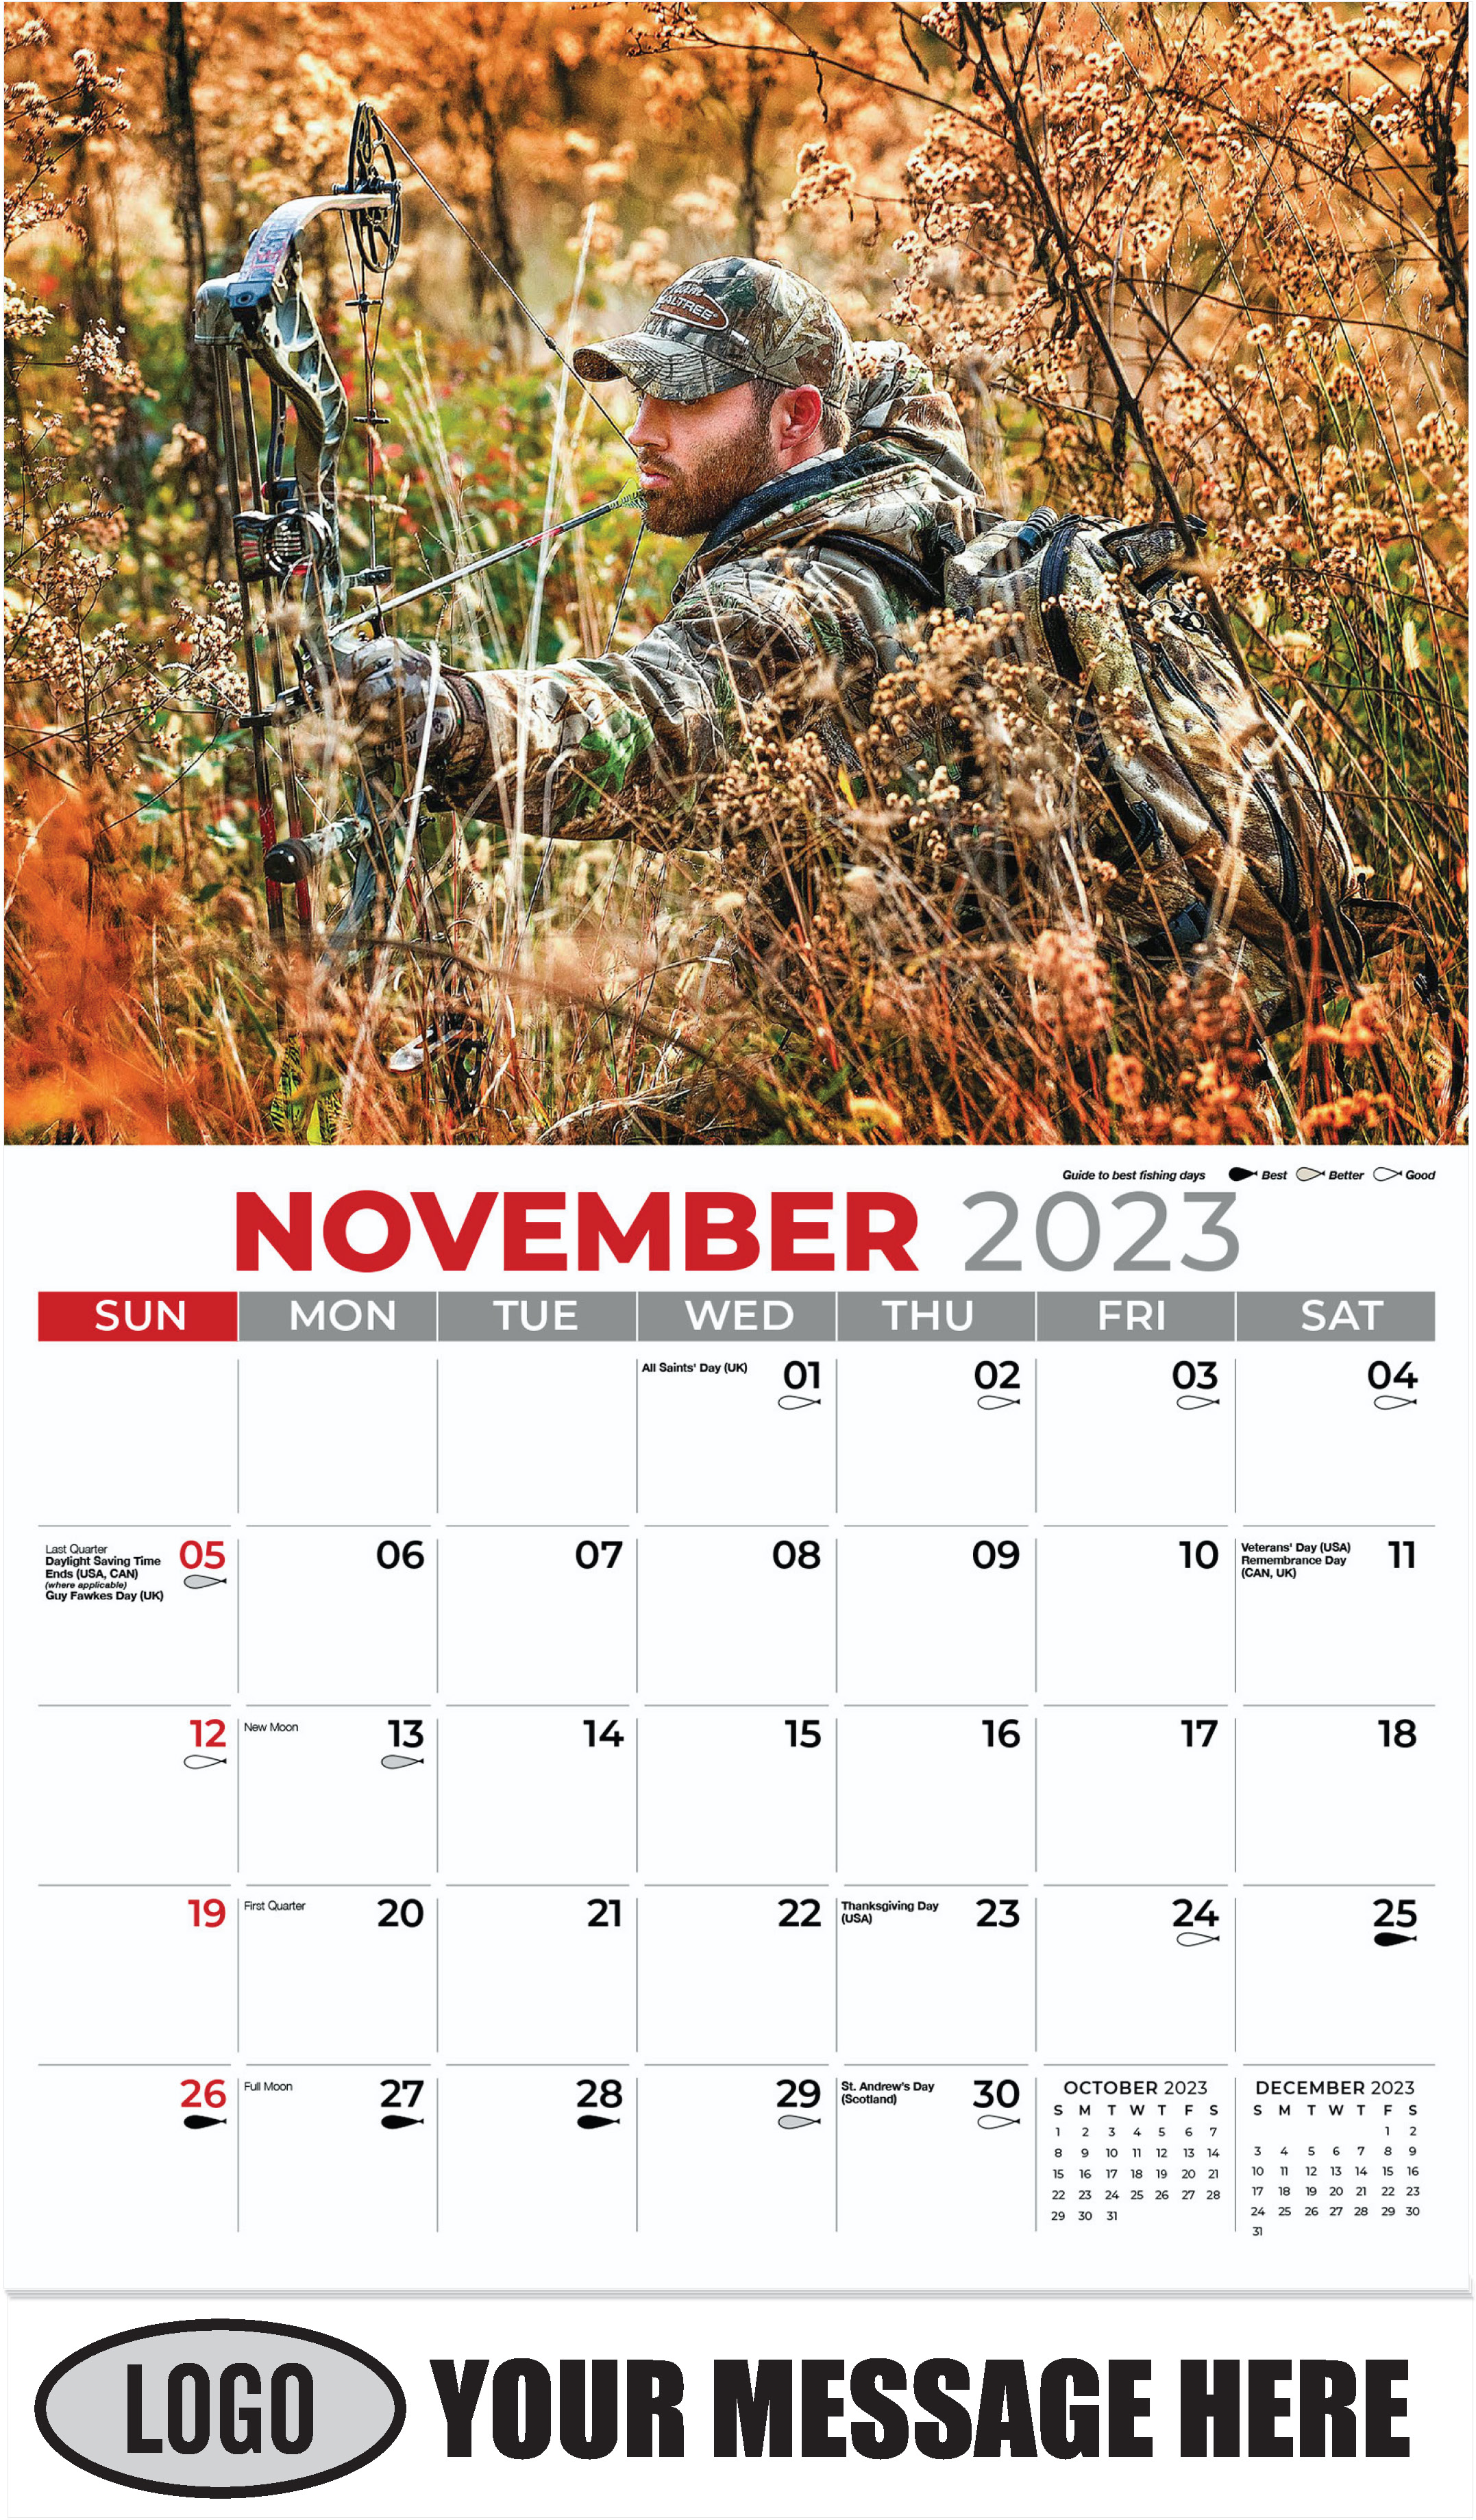 November - Fishing & Hunting 2023 Promotional Calendar